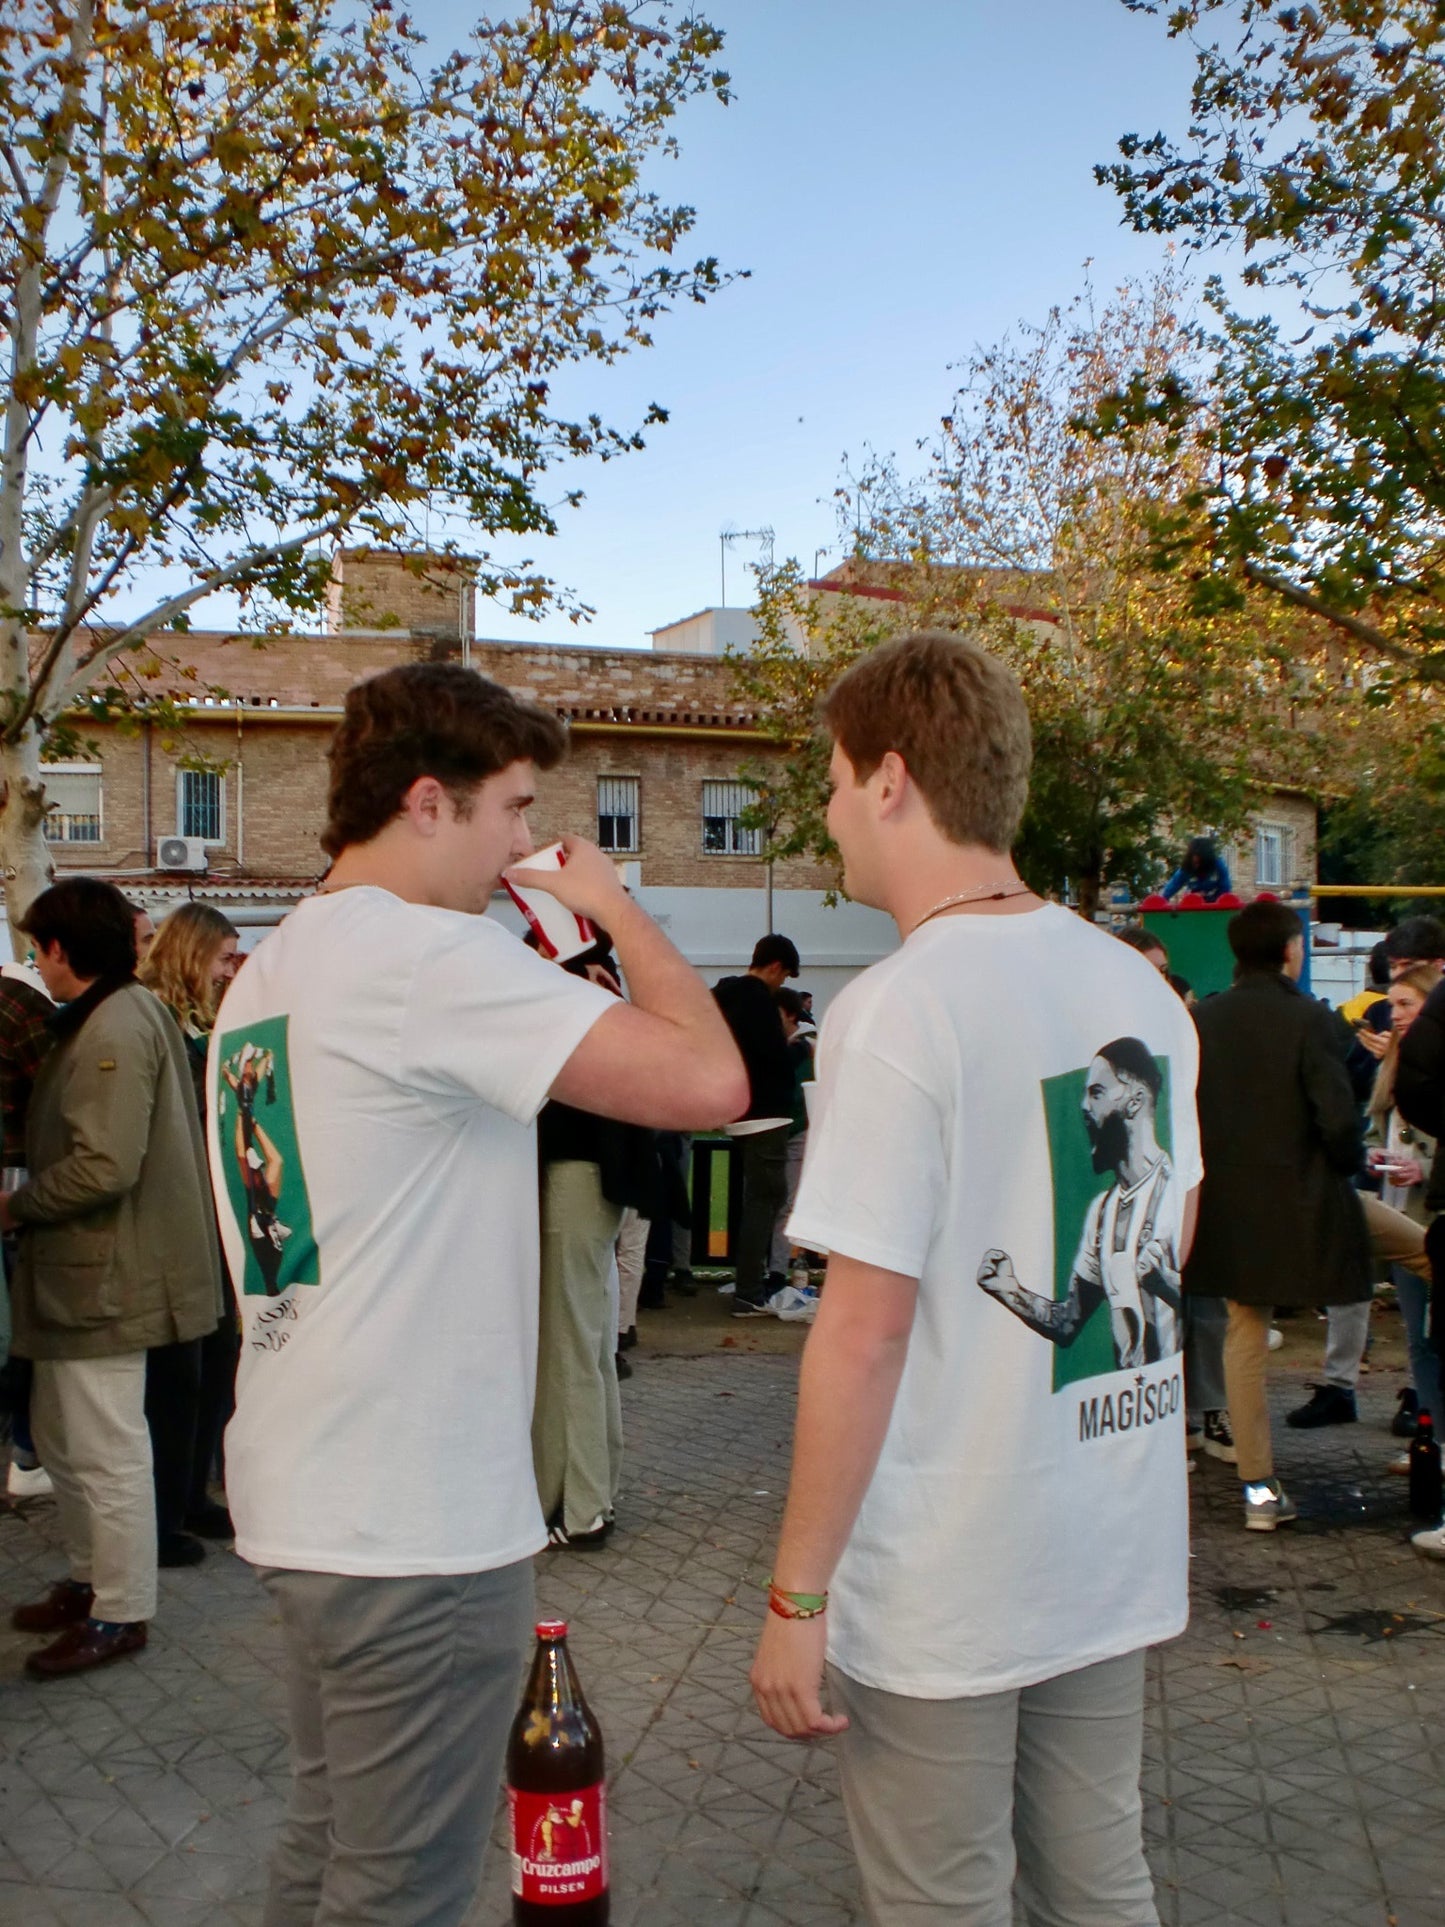 Camiseta Real Betis "PAIS PARA FILHOS"